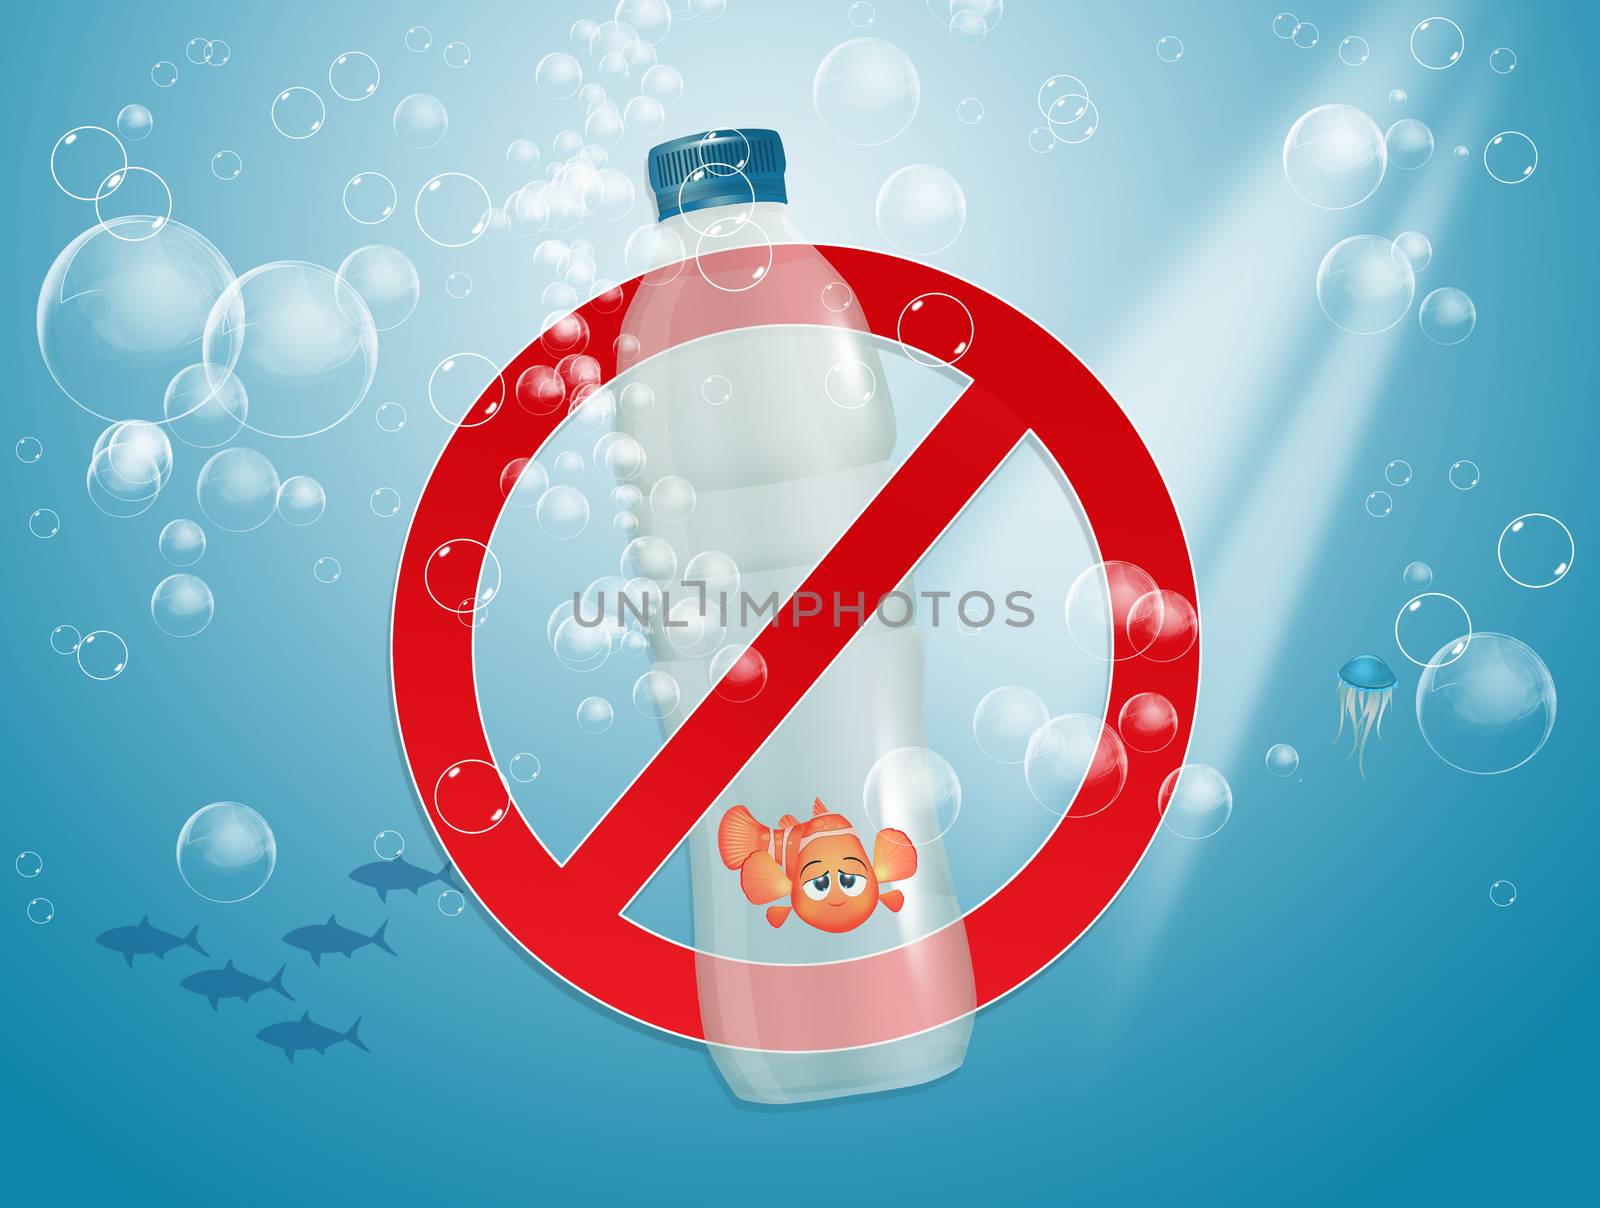 illustration of stop plastic pollution